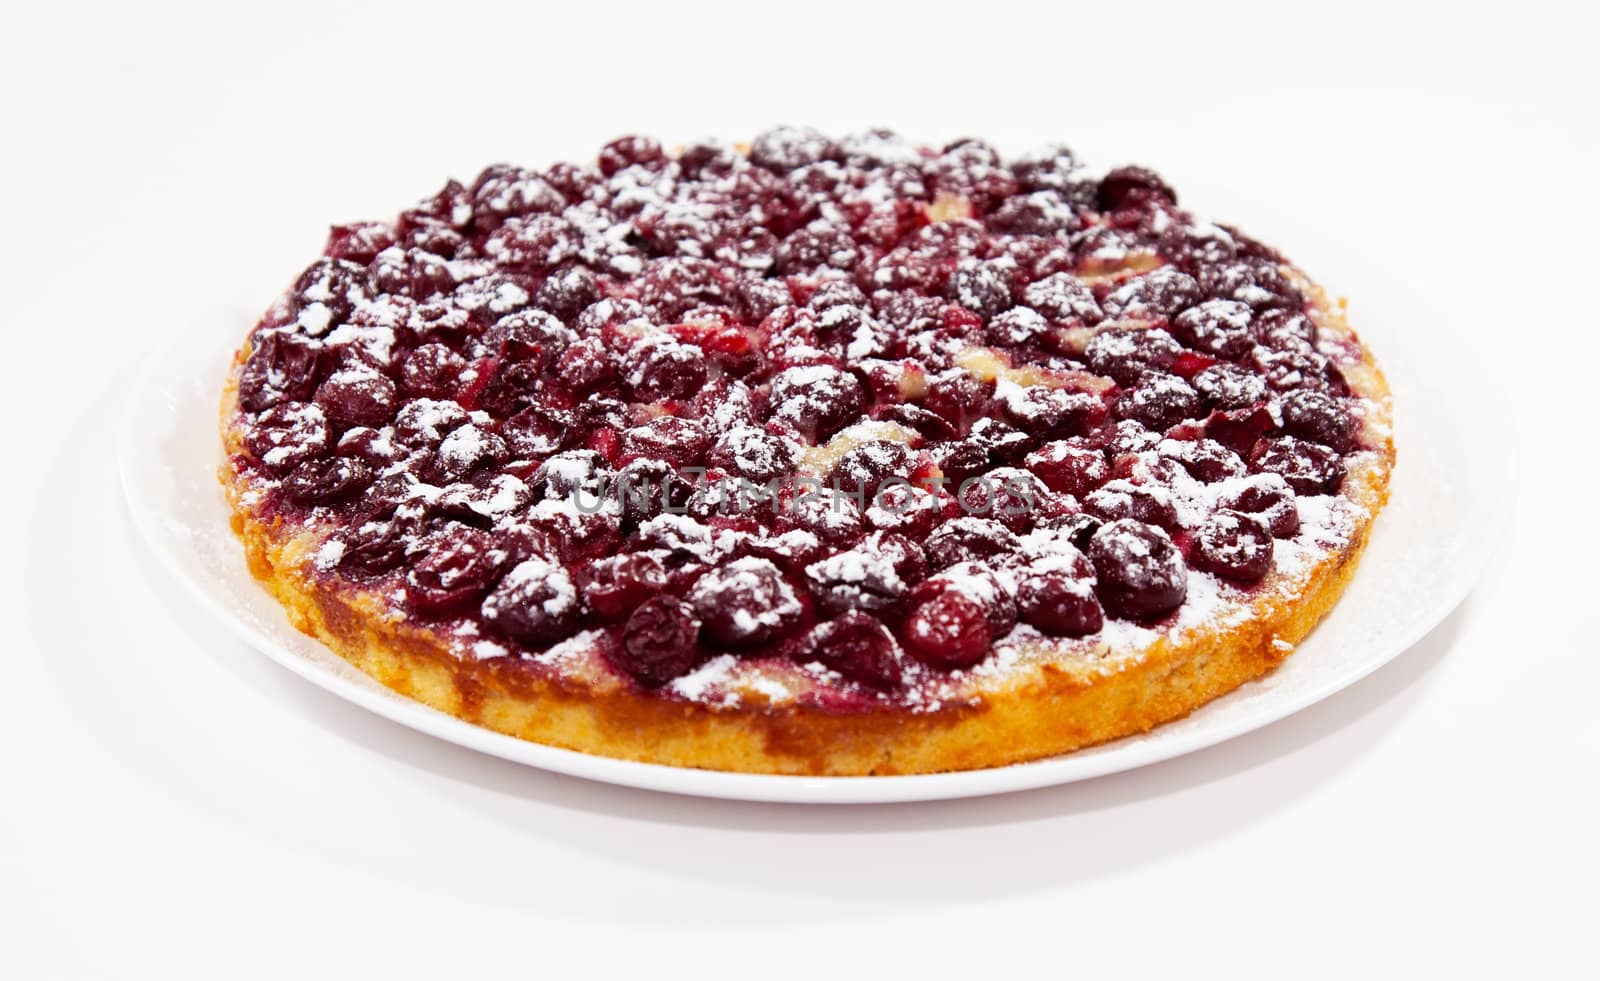 Tasty cherry pie with powdered sugar by RawGroup